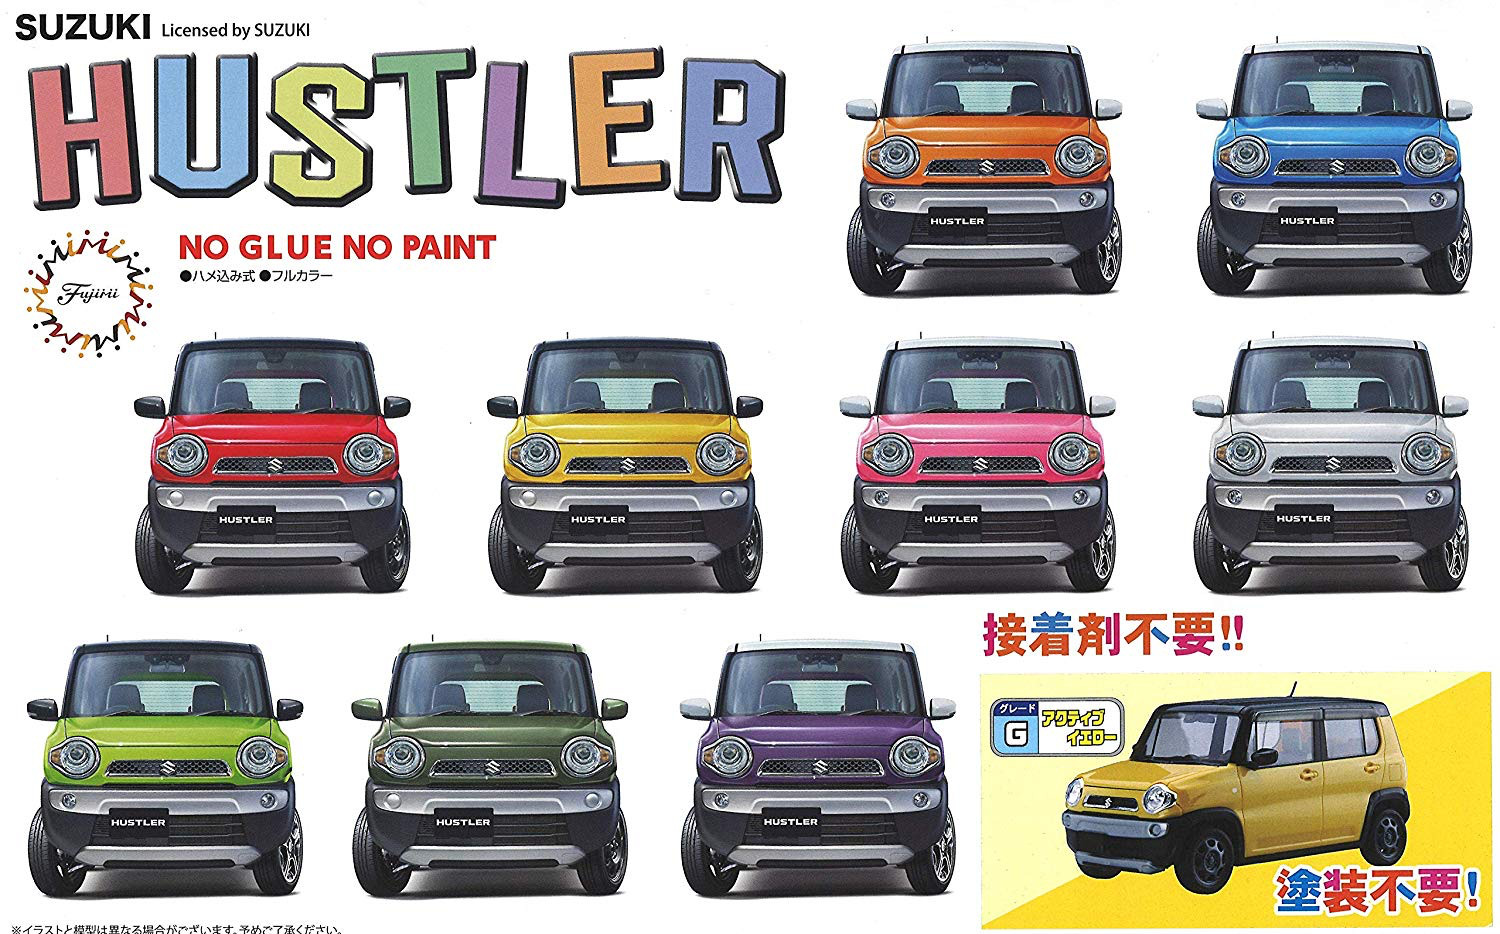 FUJIMI - 1/24 Suzuki Hustler Kei Car Passion Orange Version (No